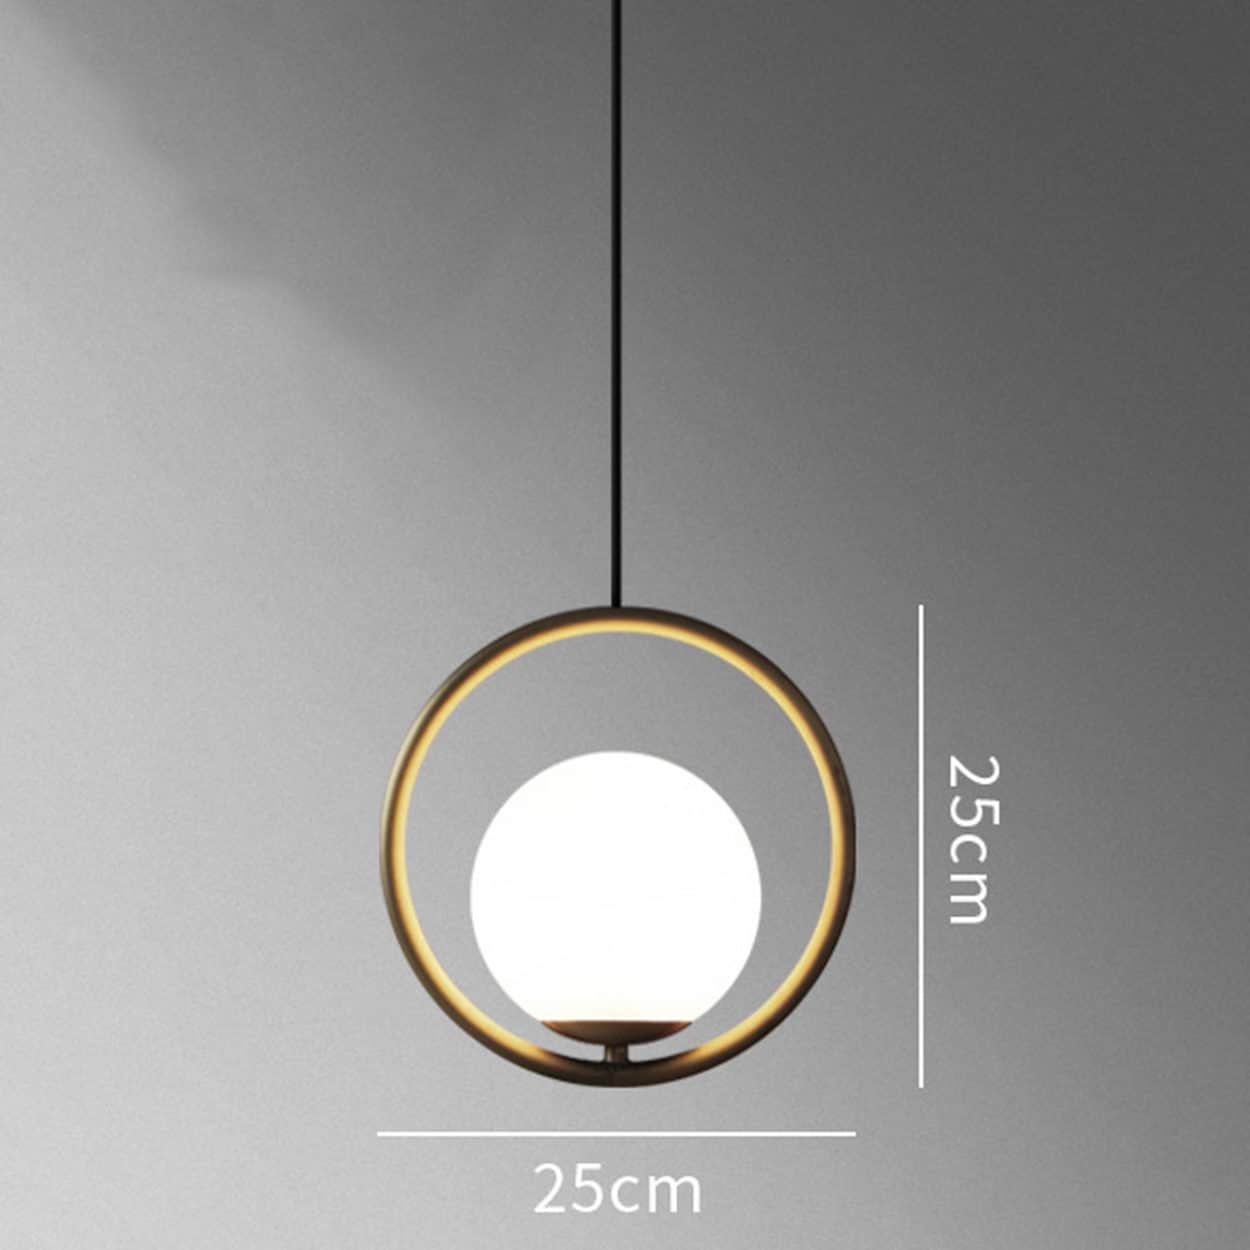 Insuppo Round Ring Ball Pendant Lamp